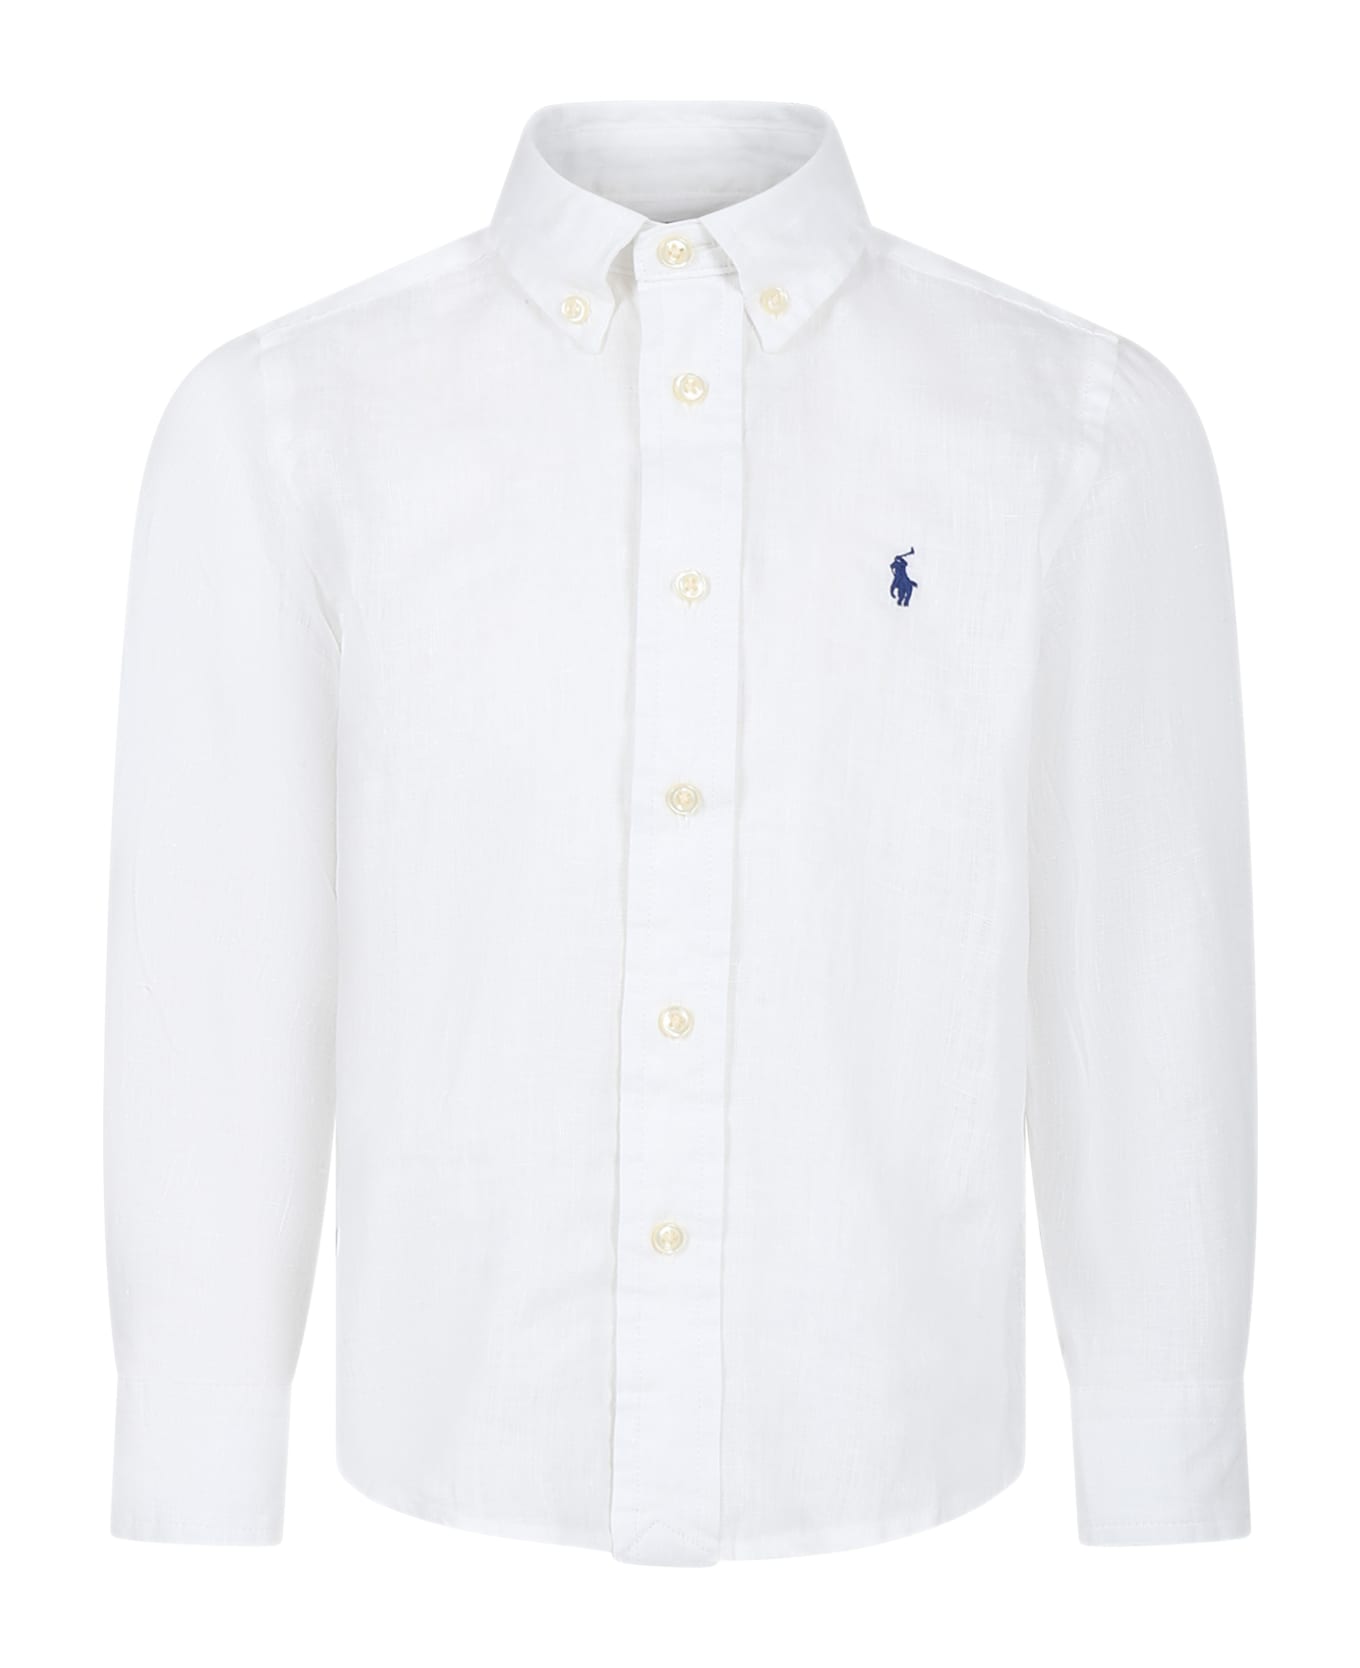 Ralph Lauren White Shirt For Boy With Pony - White シャツ